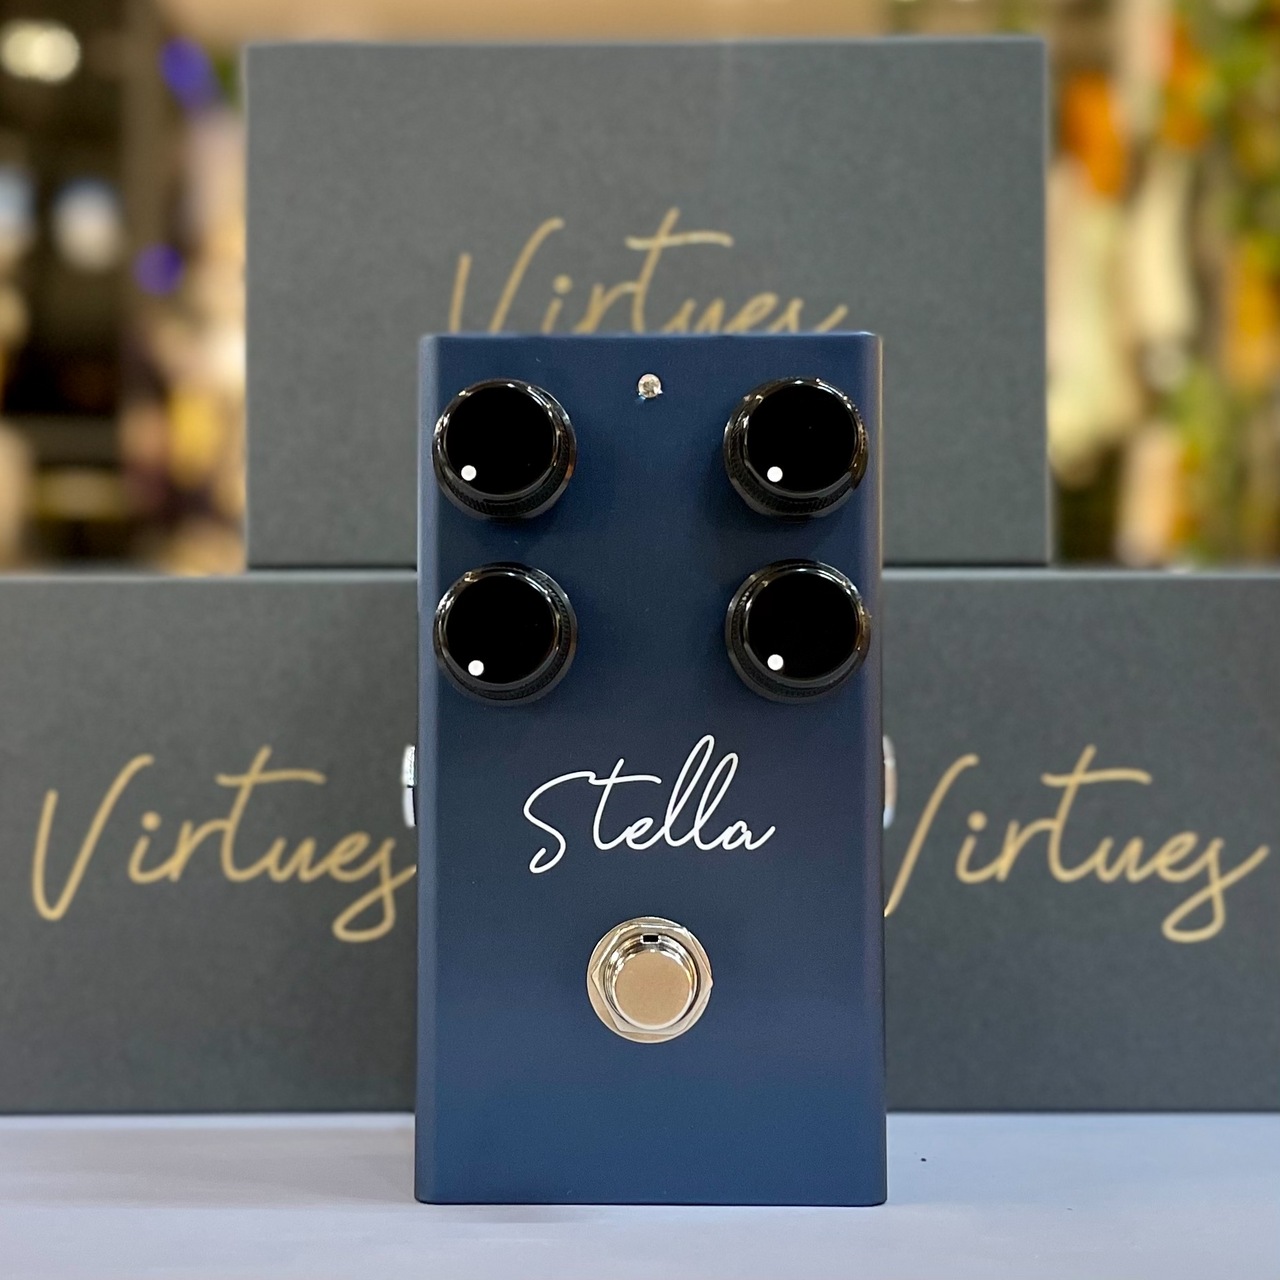 Virtues Stella - 楽器/器材